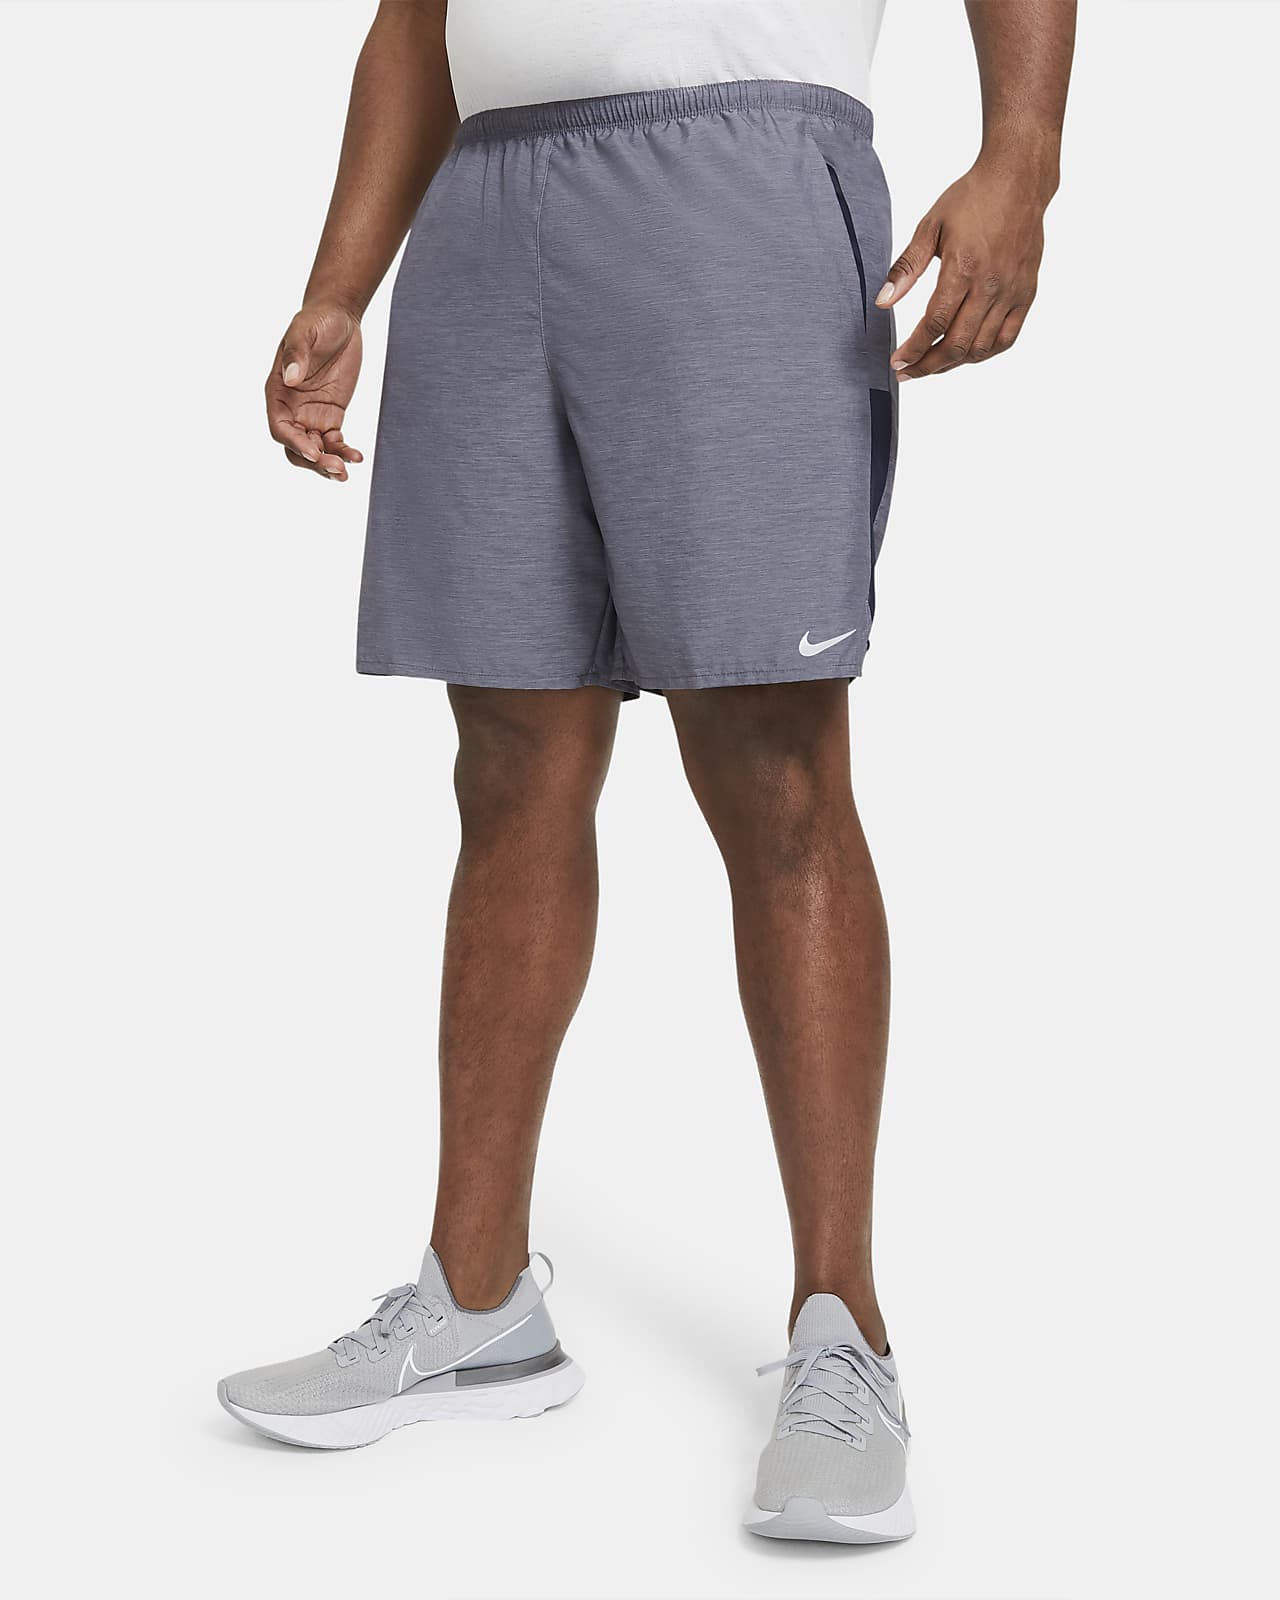 nike challenger shorts grey